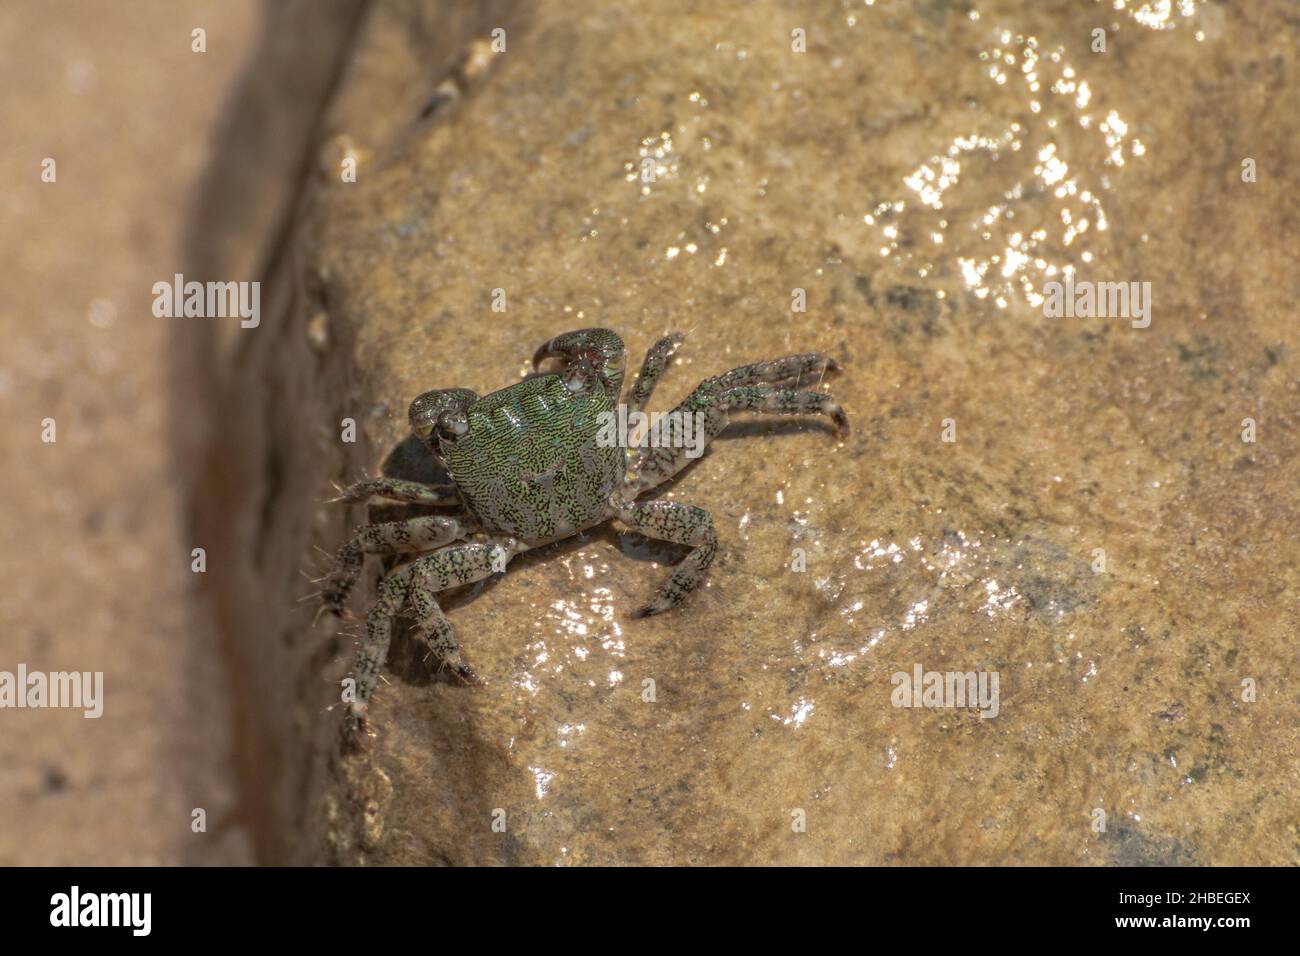 Characteristic specimen of Mediterranean crab on rocks Stock Photo